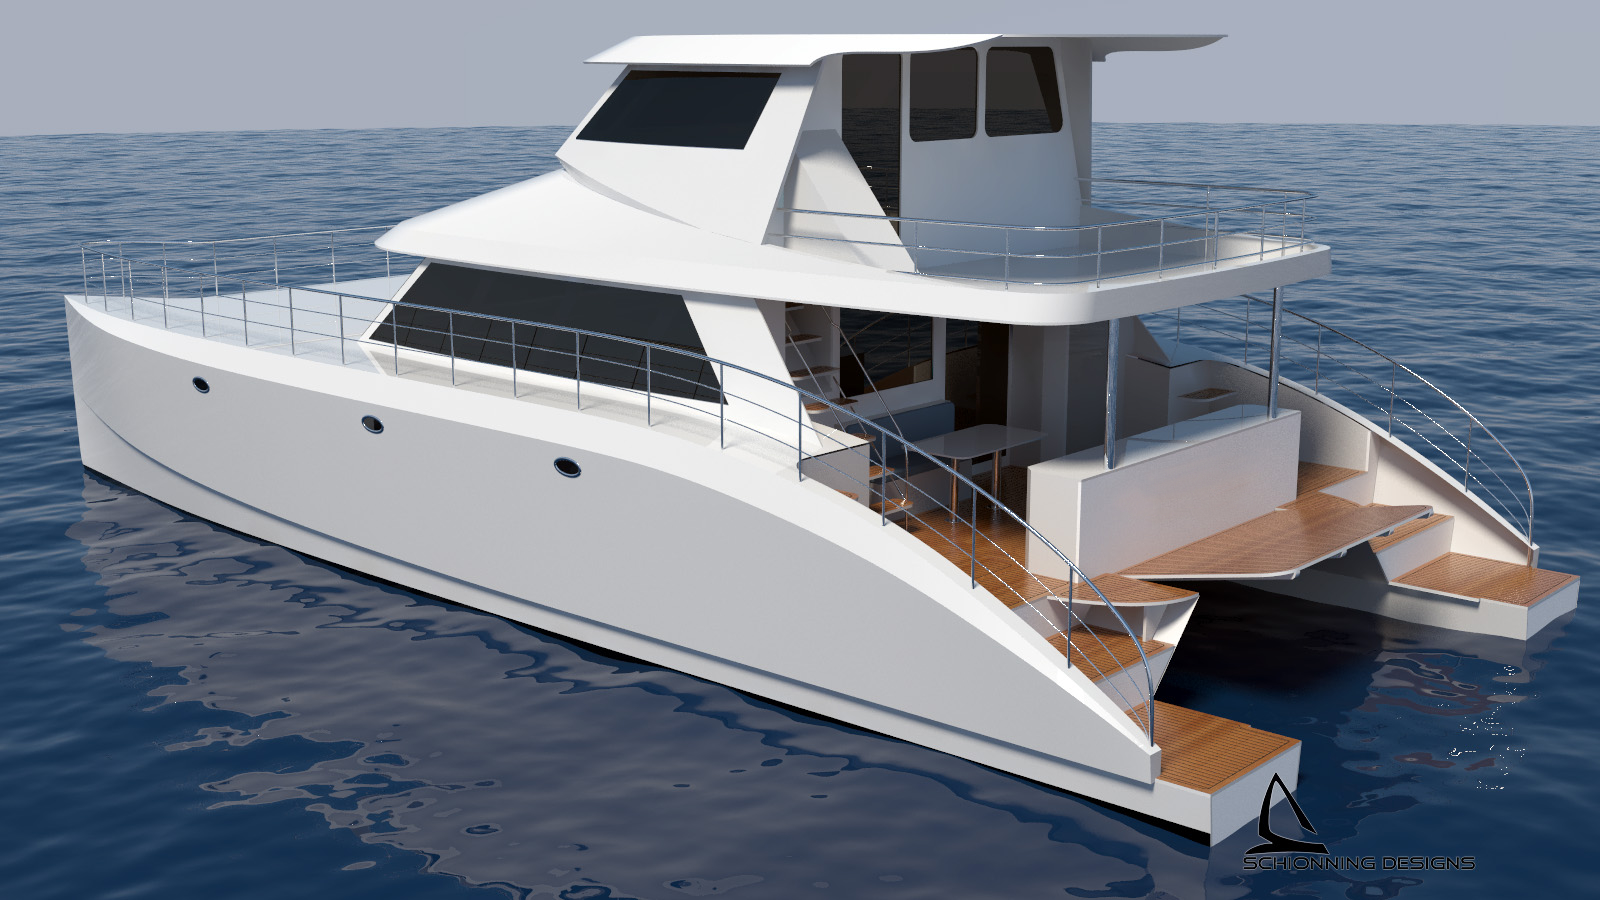 Schionning Designs Prowler 1500 Power Catamaran - Exterior CAD Render 04